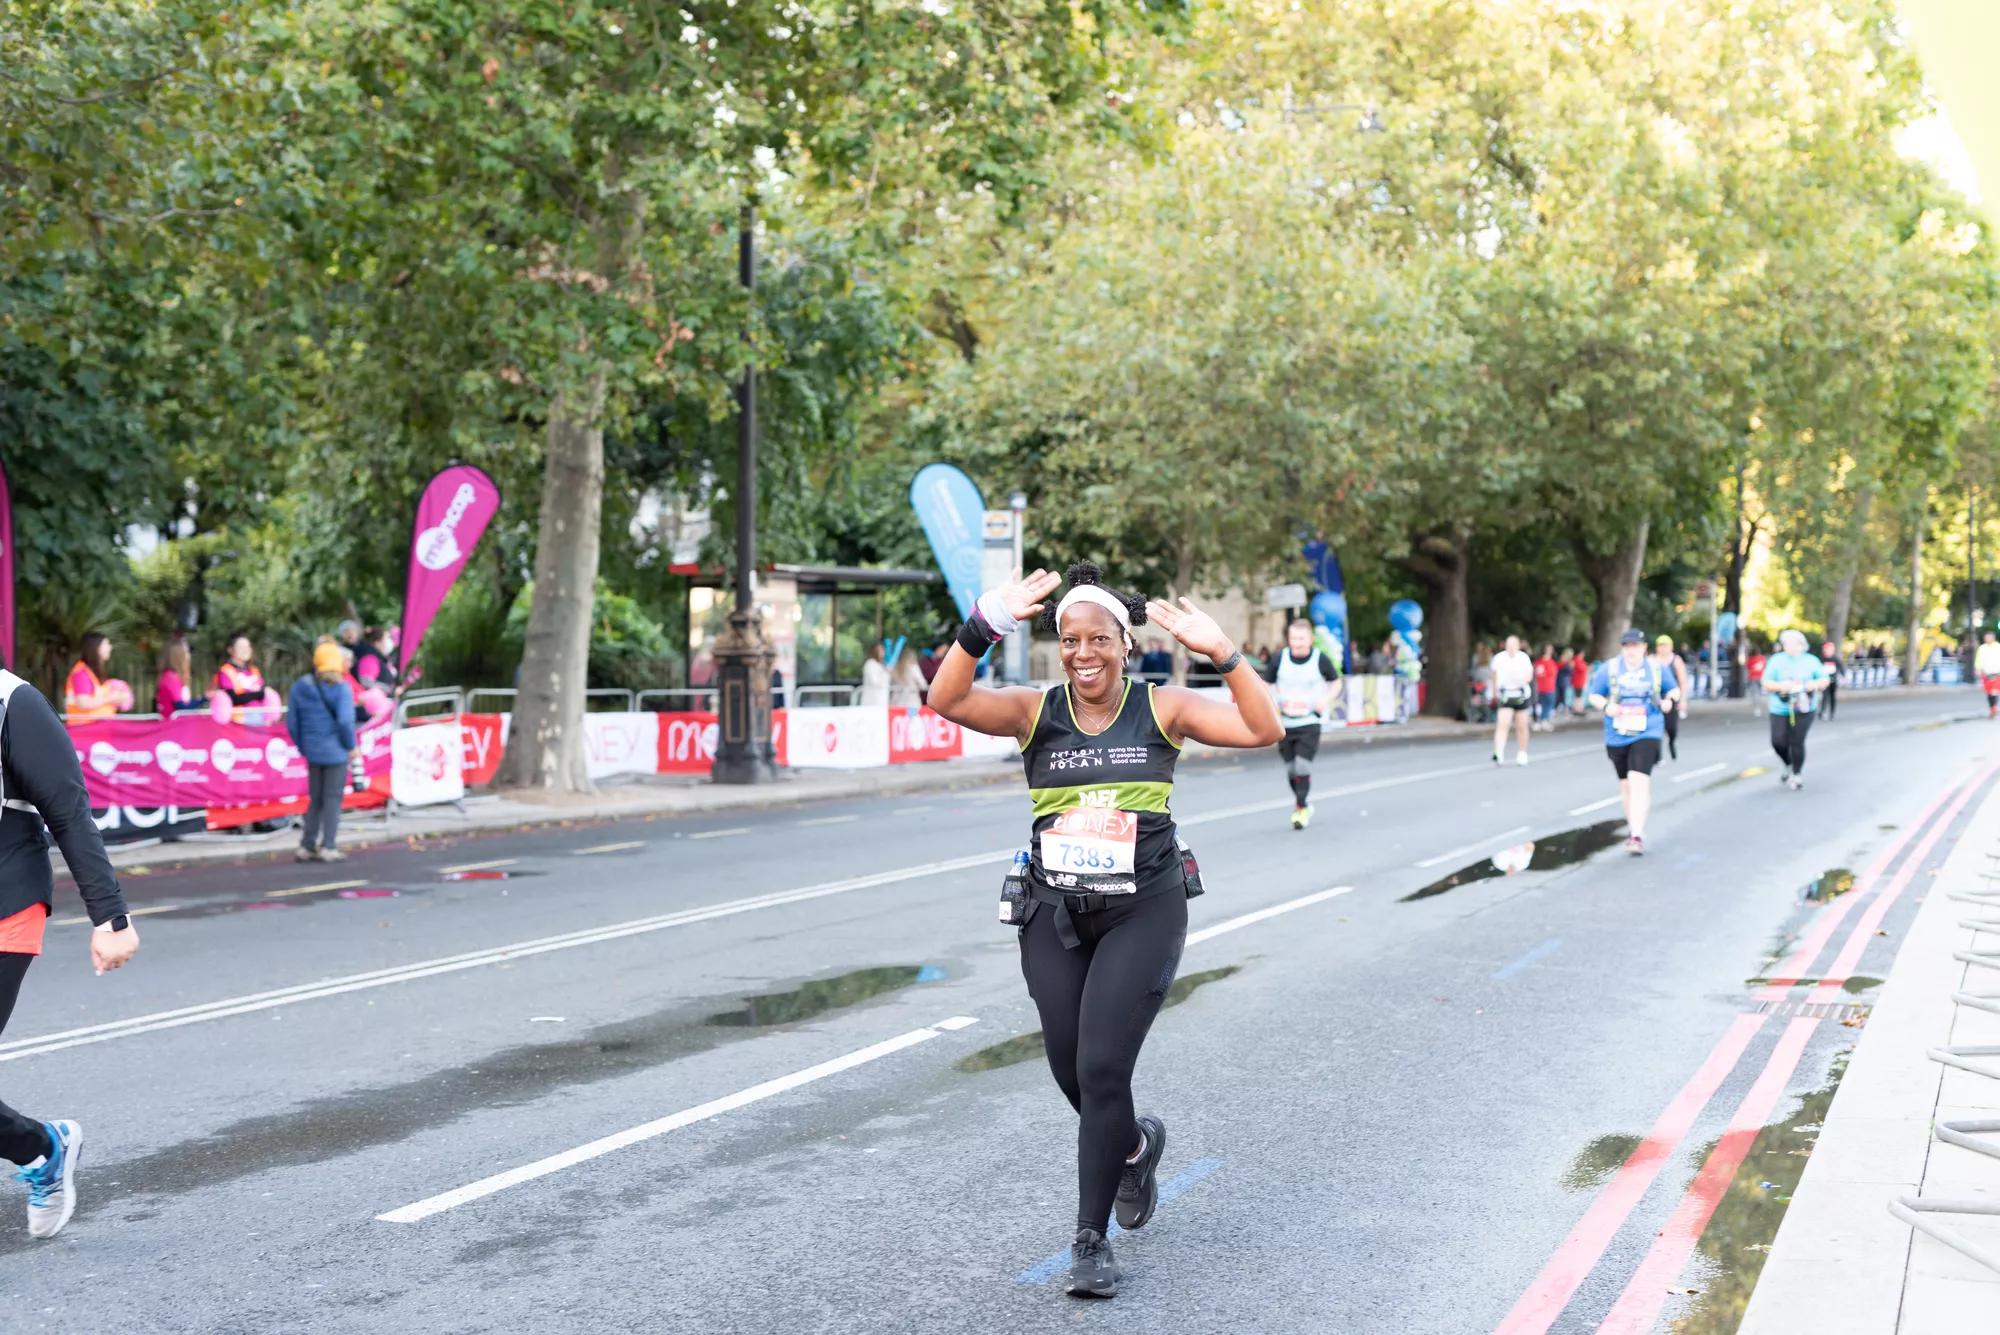 Anthony Nolan runner at the London Marathon